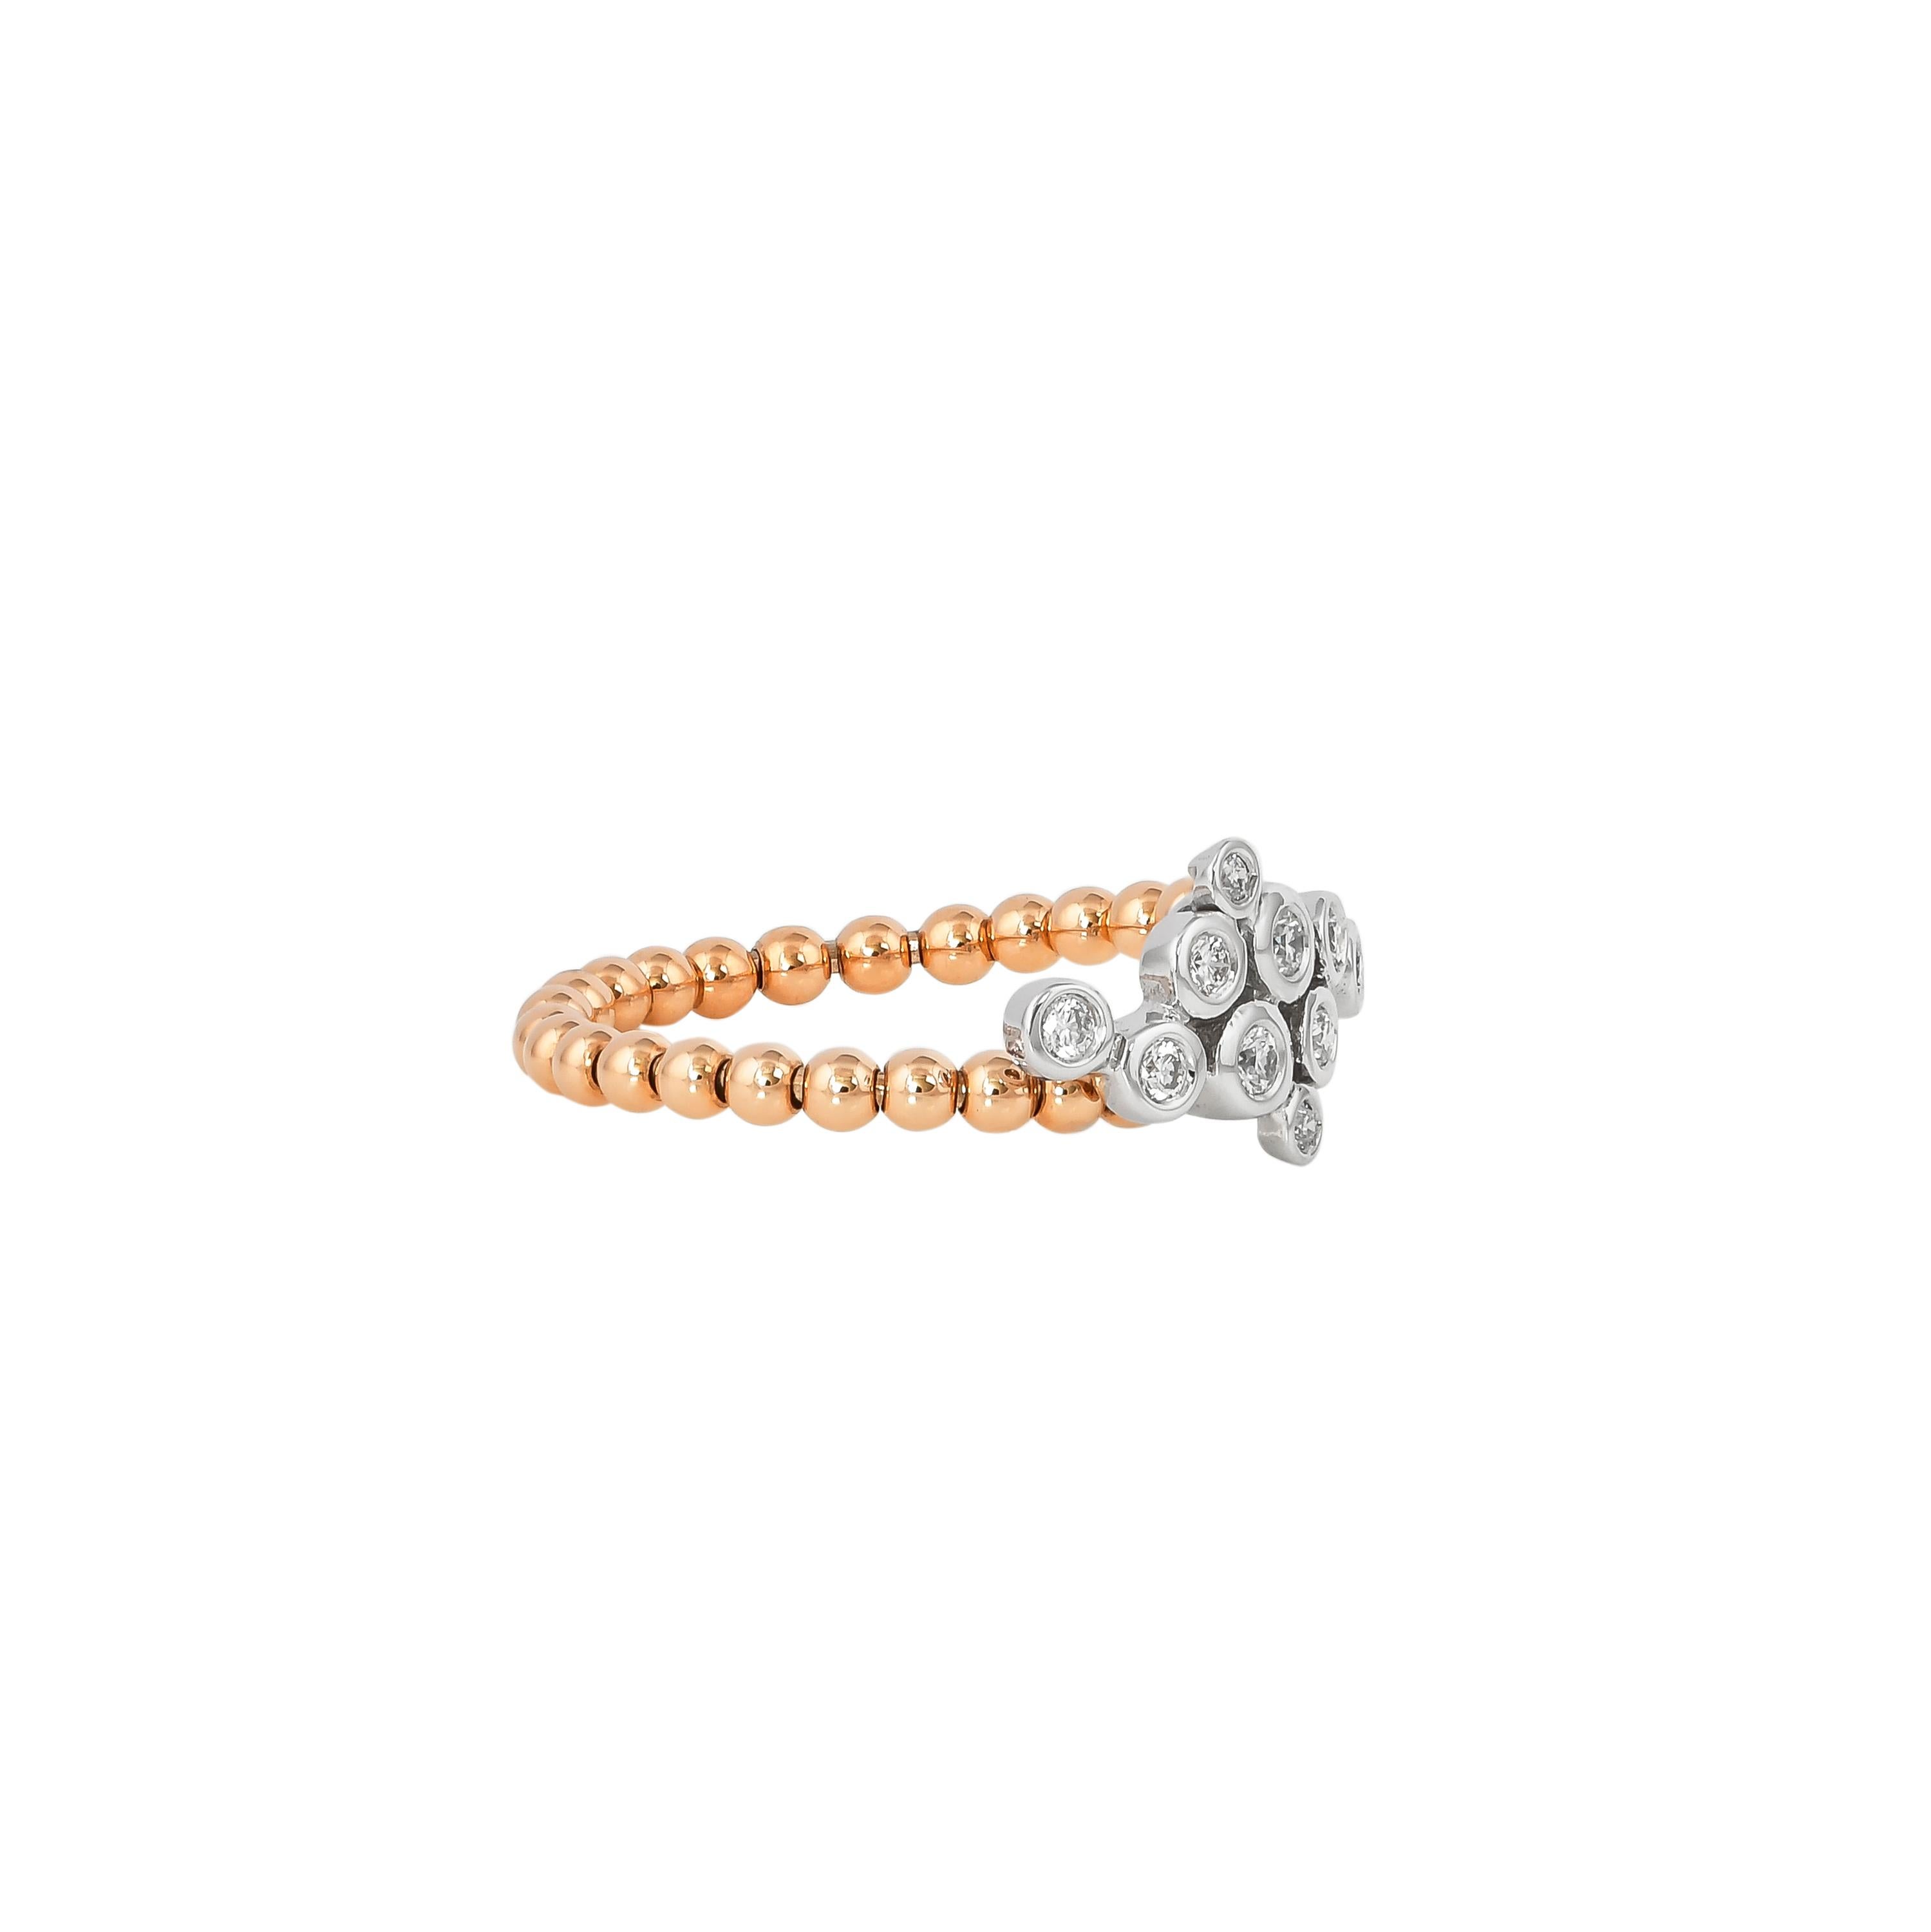 Unique and Designer Cocktail Rings by Sunita Nahata Fine Design.

Classic Diamond ring in 18K White & Rose gold. 

Diamond: 0.05carat, 1.90mm size, round shape, G colour, VS clarity.
Diamond: 0.099 carat, 1.60mm size, round shape, G colour, VS